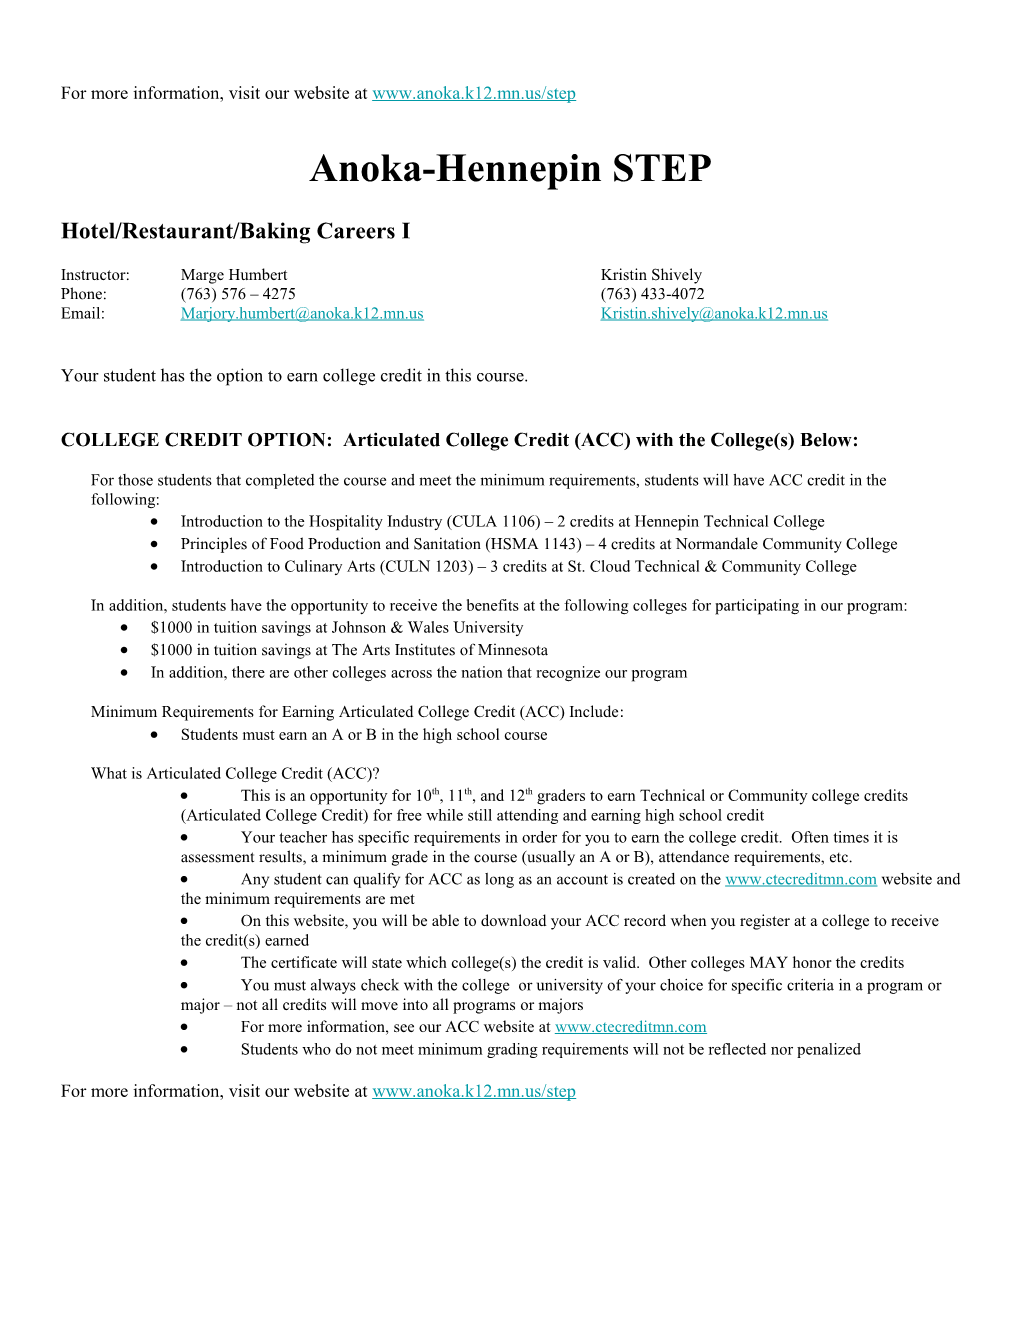 Anoka-Hennepin STEP